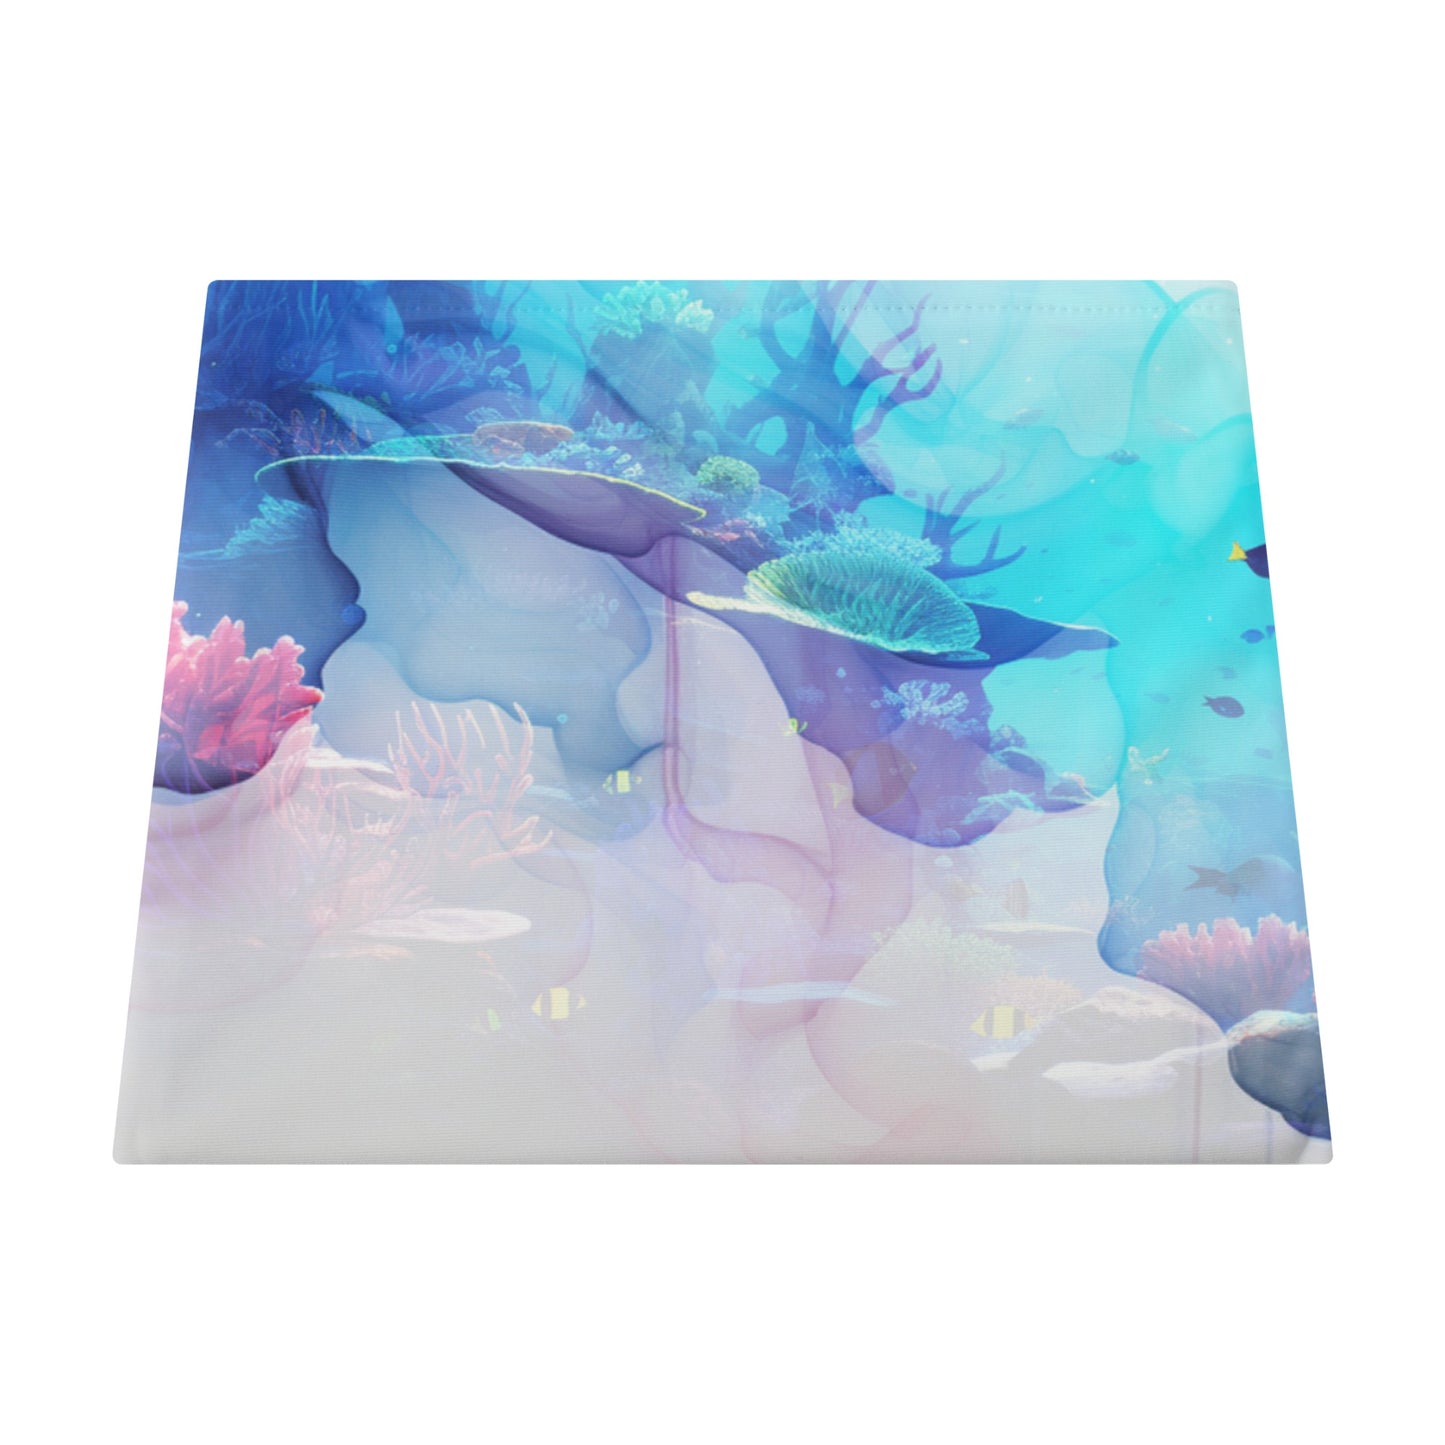 Neduz Designs Dreamscape Collection - Coral Reef Ice Head Wrap